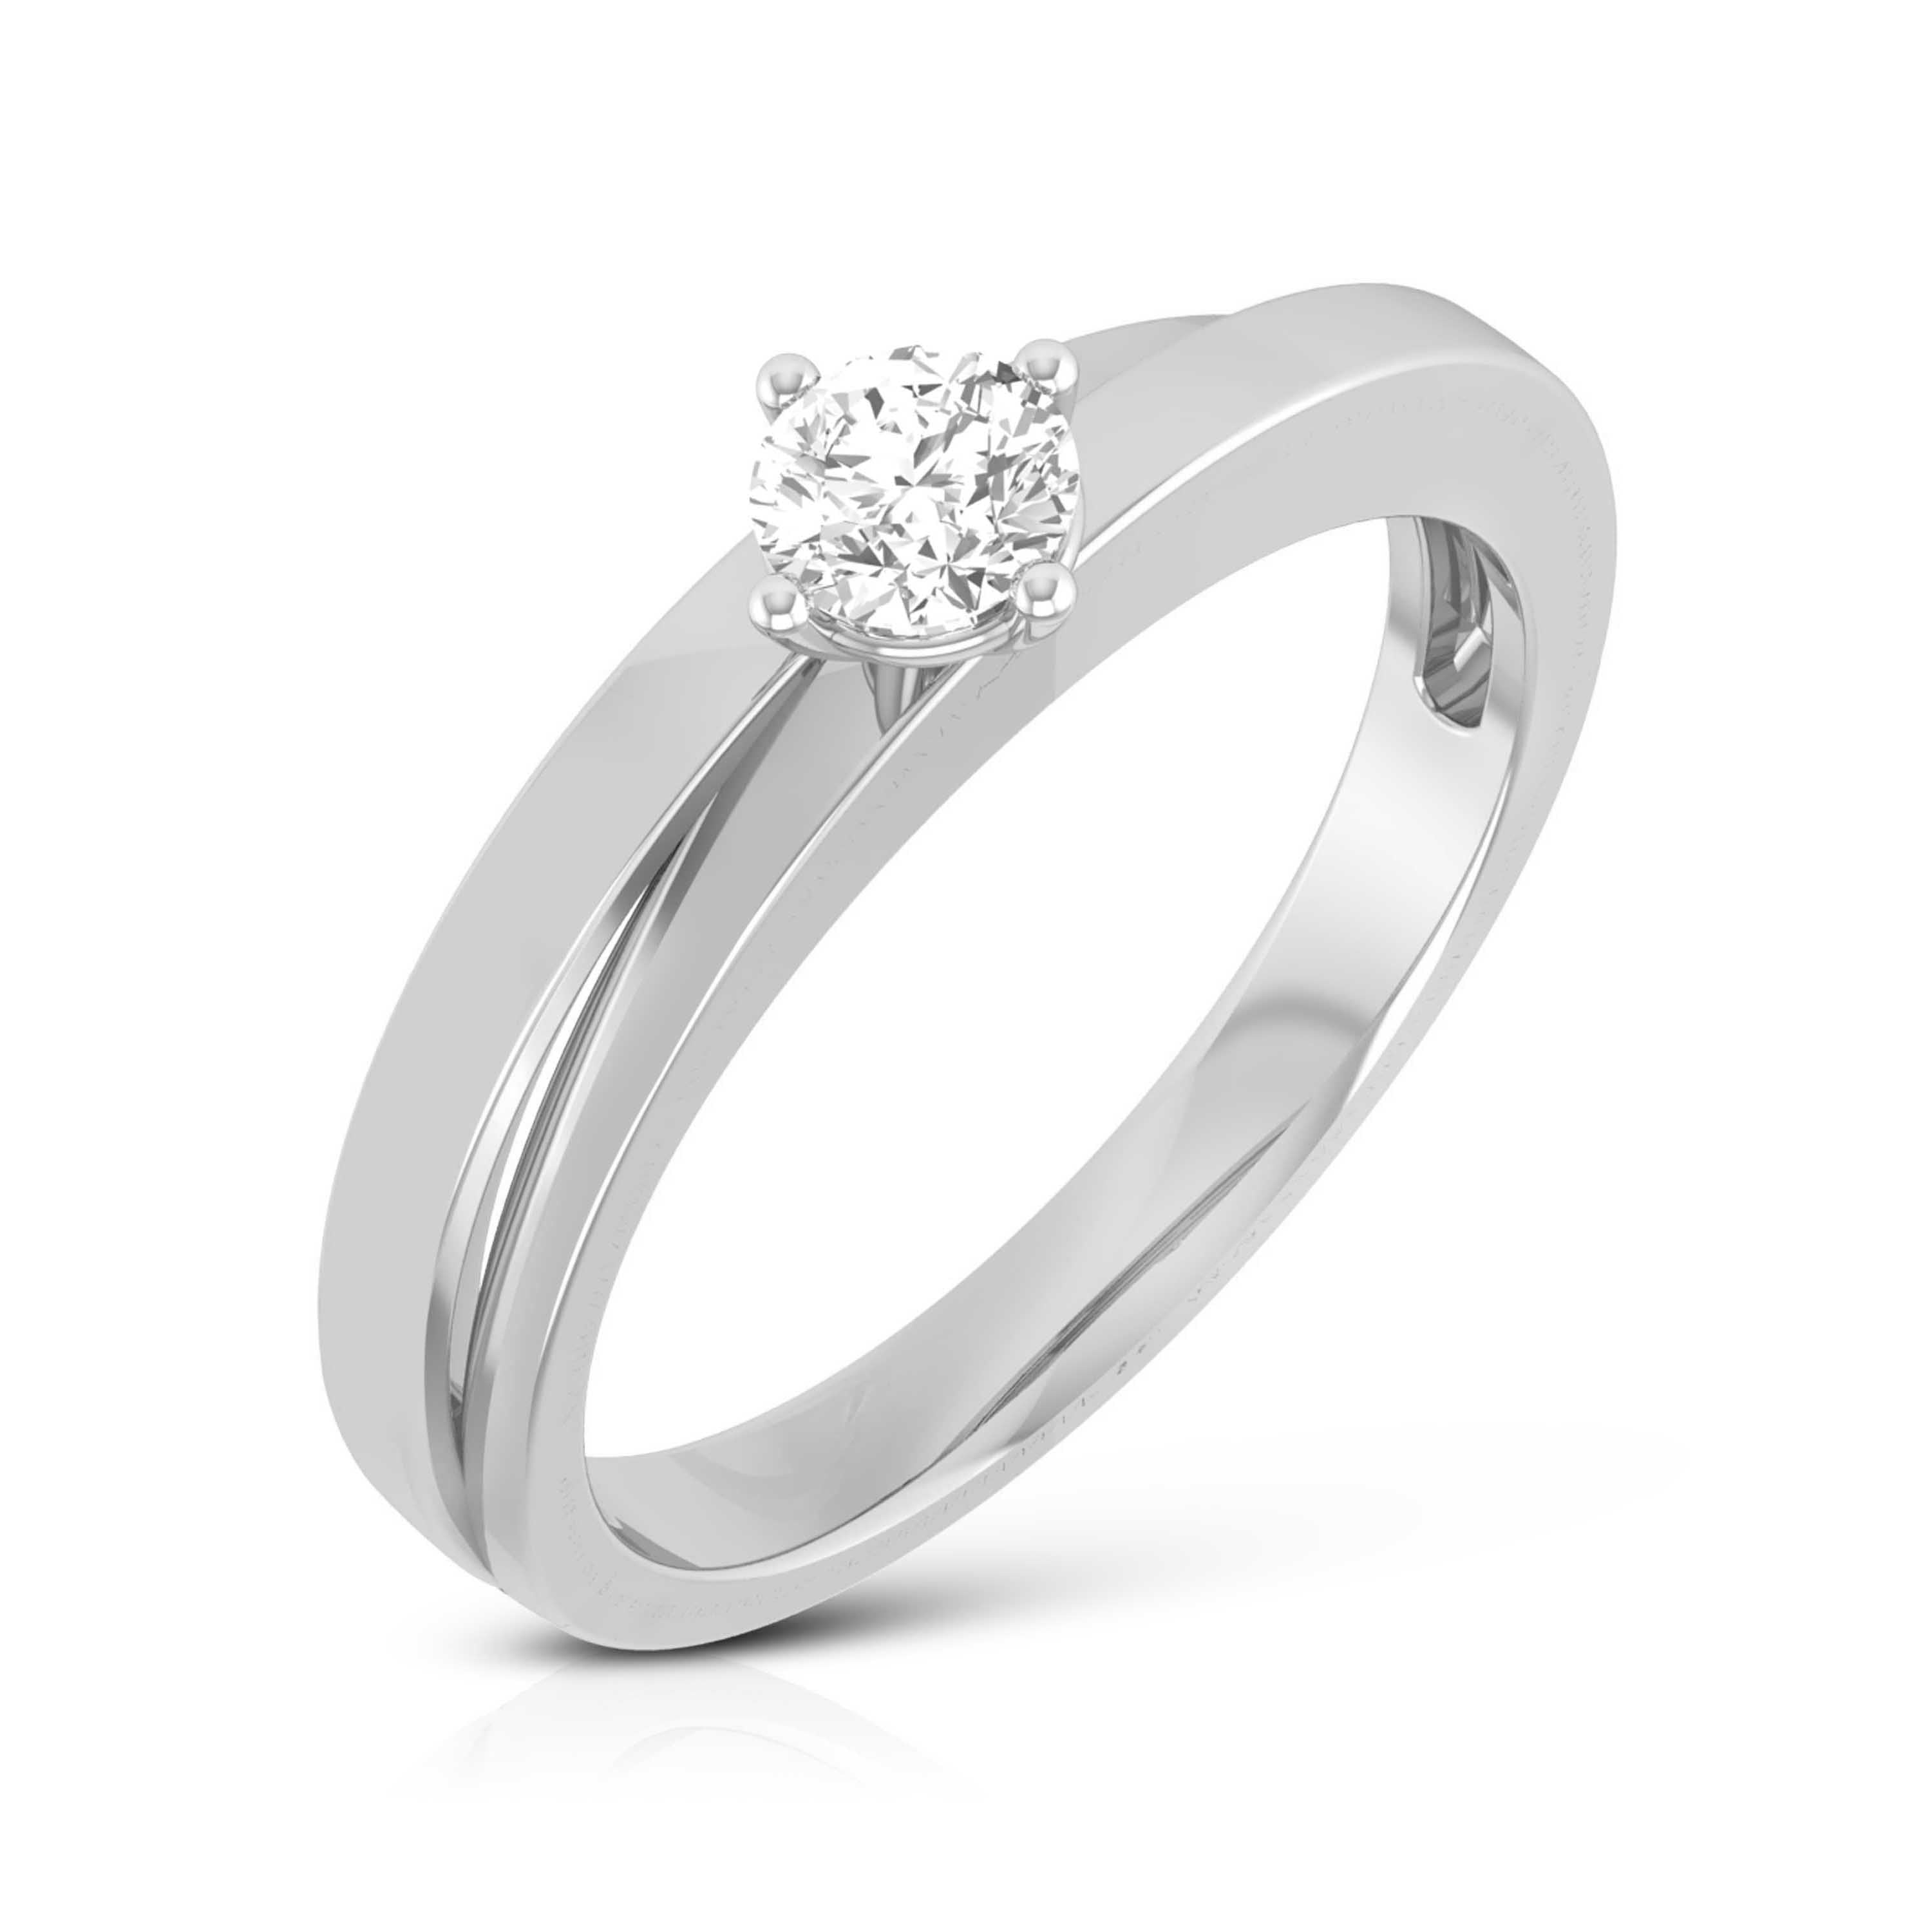 White Platinum Ring M5375 at best price in Thrissur | ID: 16874671291